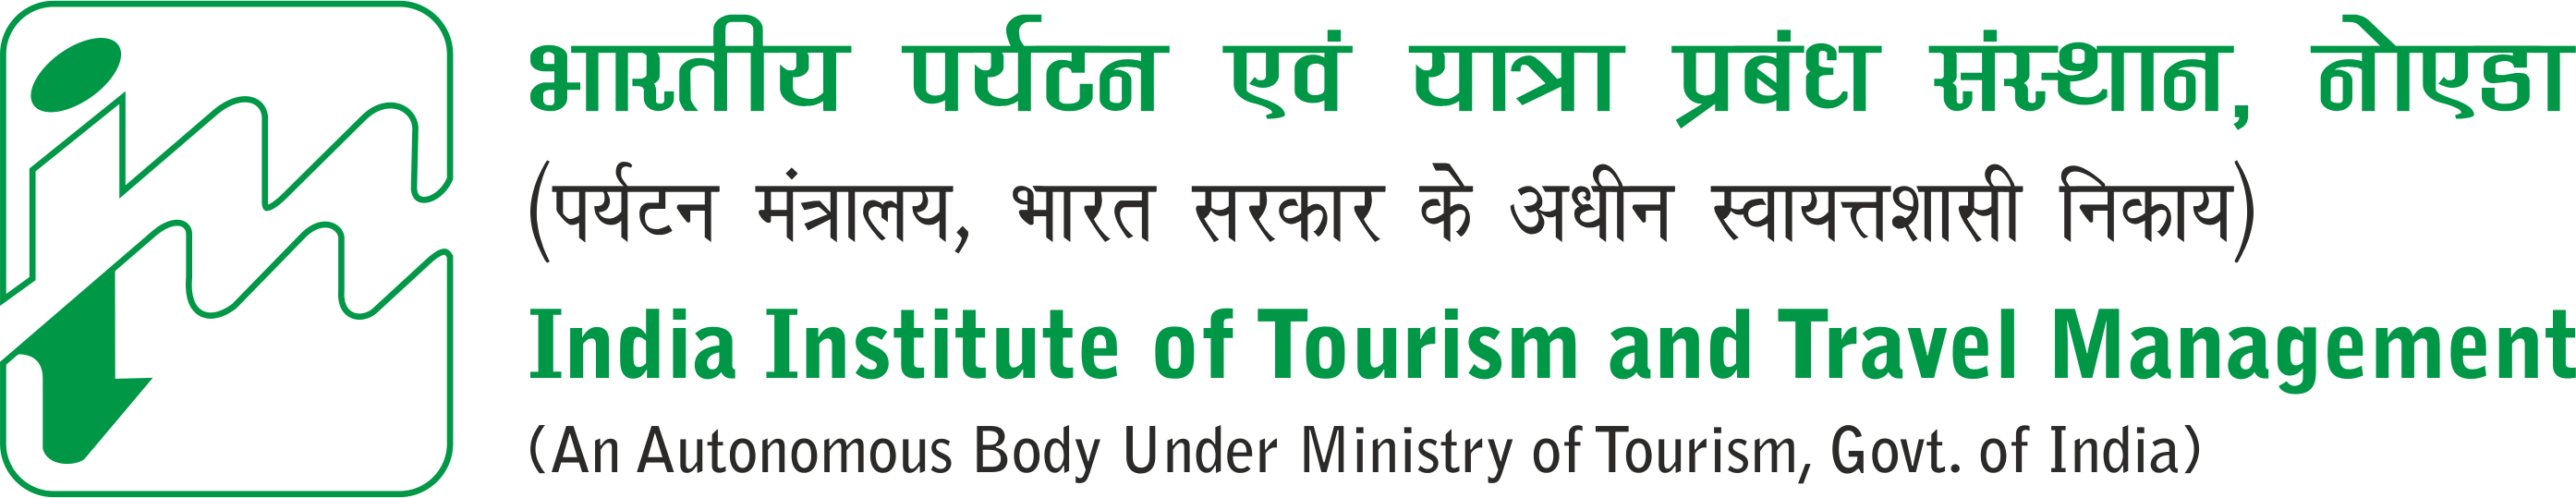 Indian Institute of Tourism & Travel Management